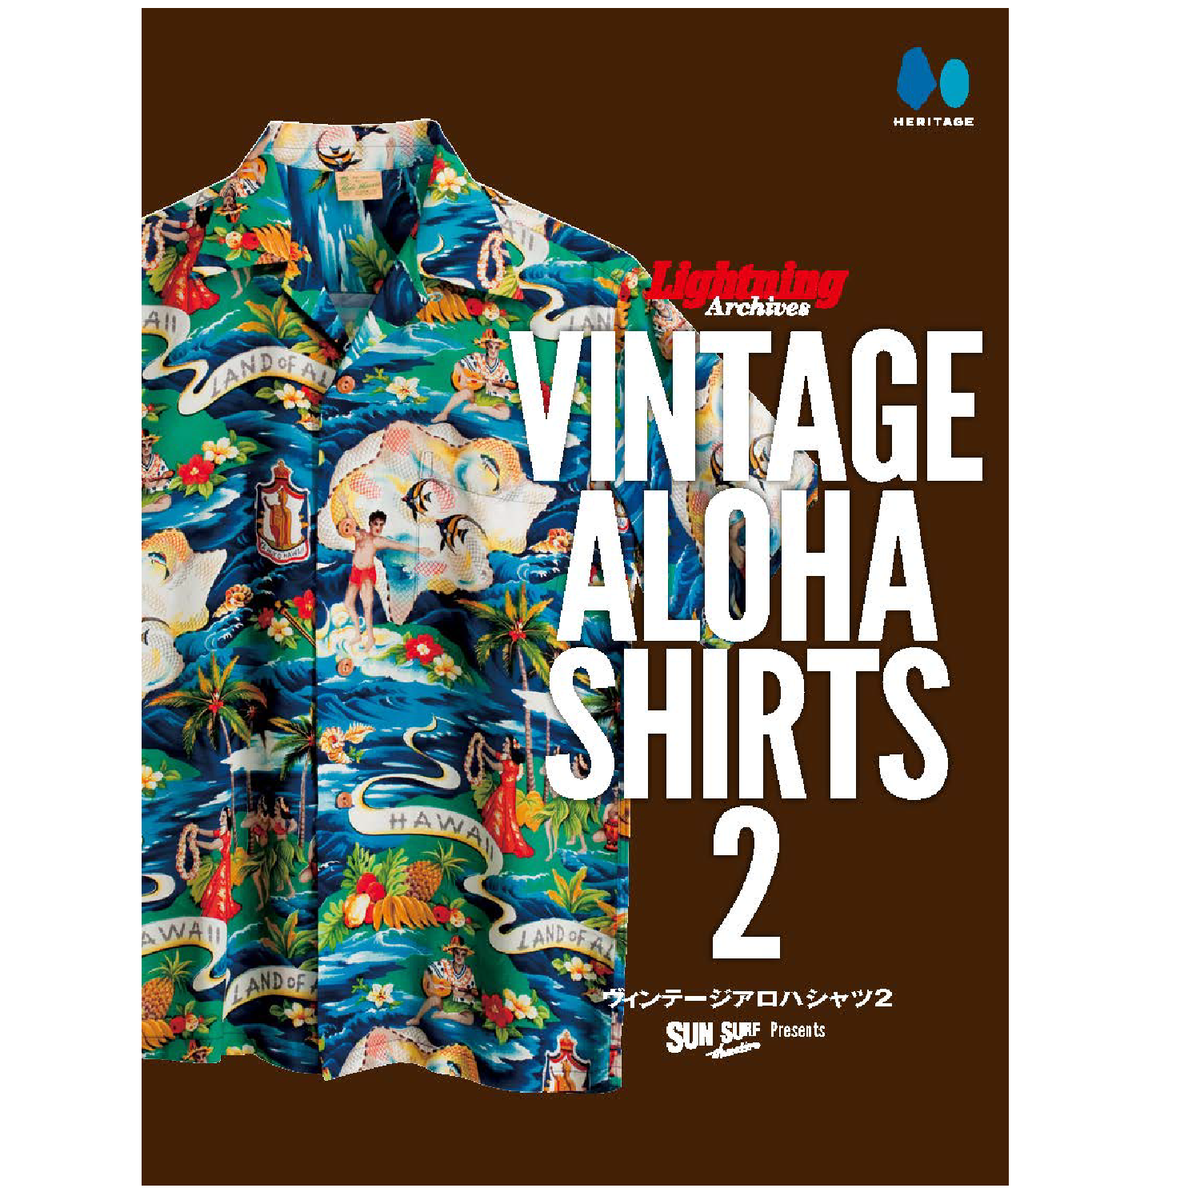 Lightning Archives Magazine - Sun Surf presents Vintage Aloha Shirts 2